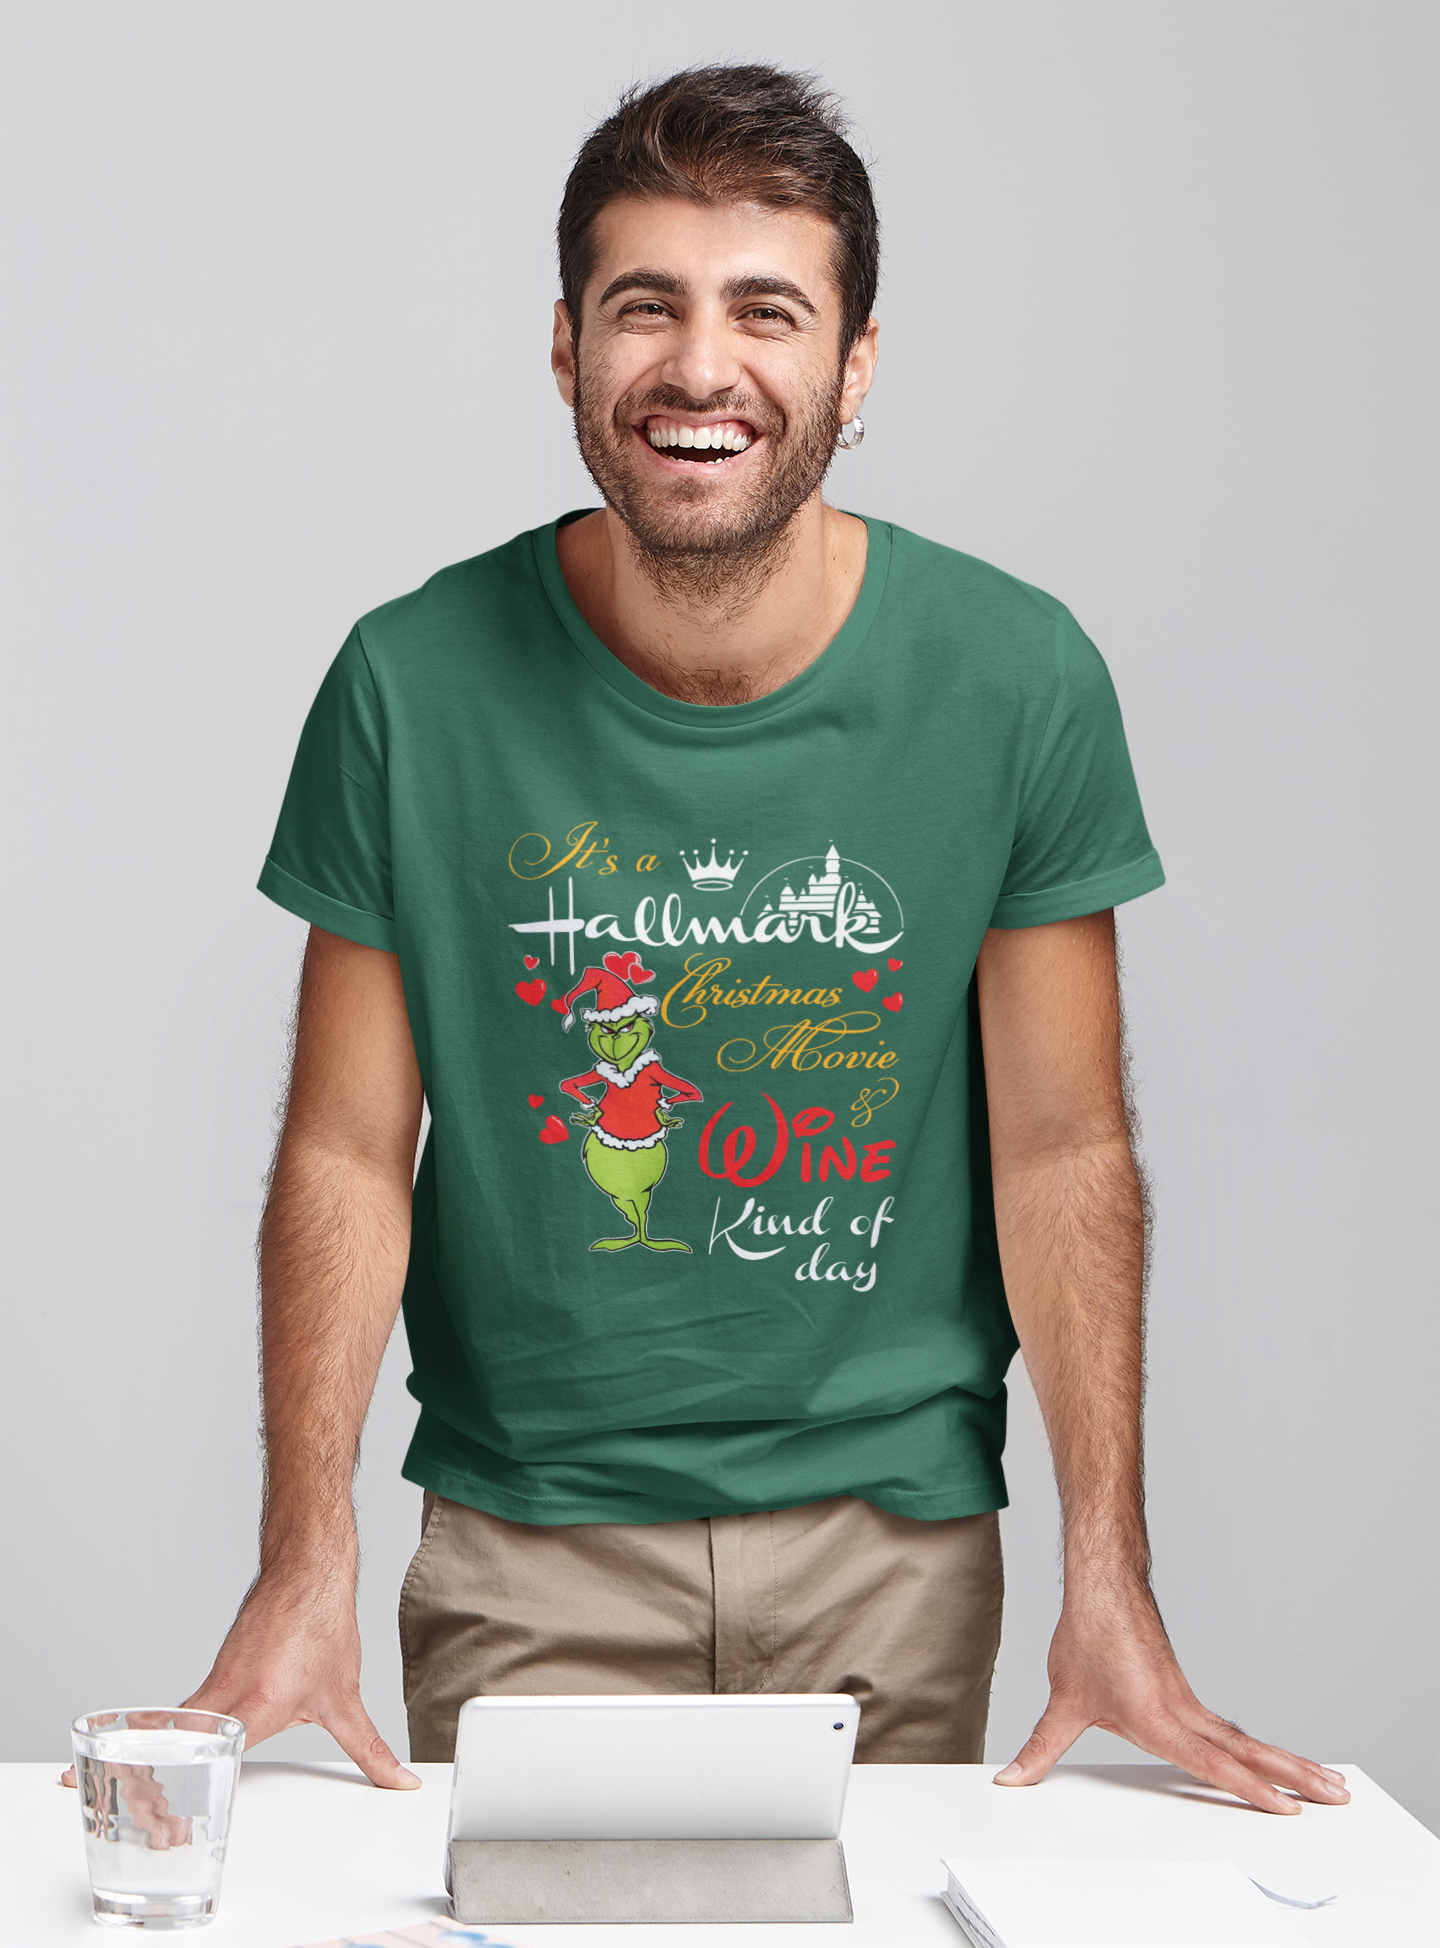 Grinch T Shirt, Hallmark Christmas T Shirt, Its A Hallmark Christmas Movie Tshirt, Christmas Gifts